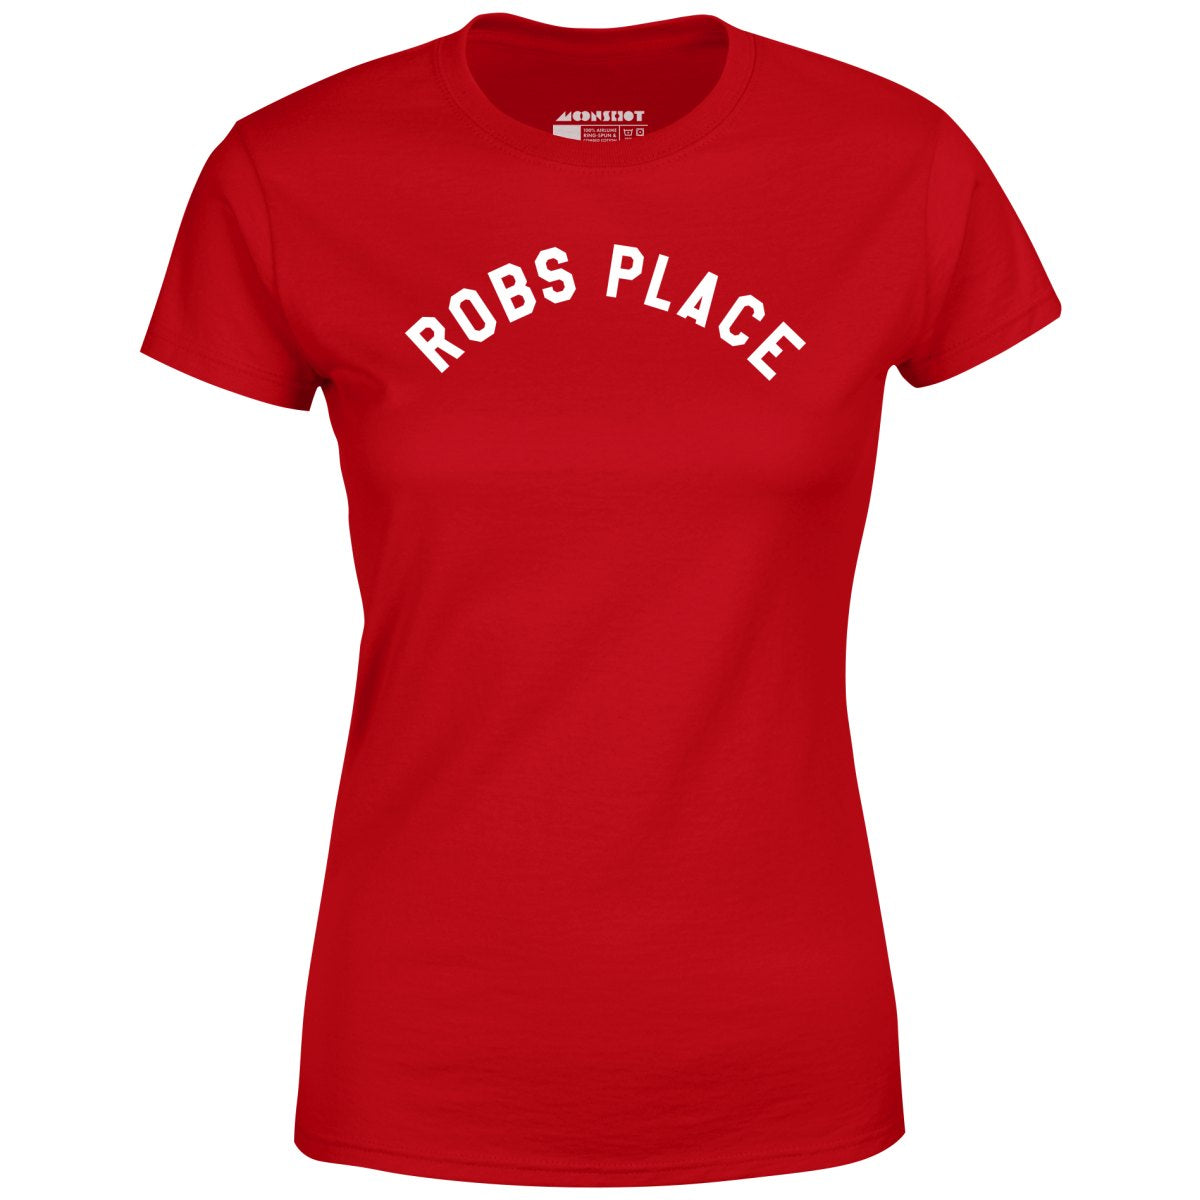 Rob's Place - Women's T-Shirt